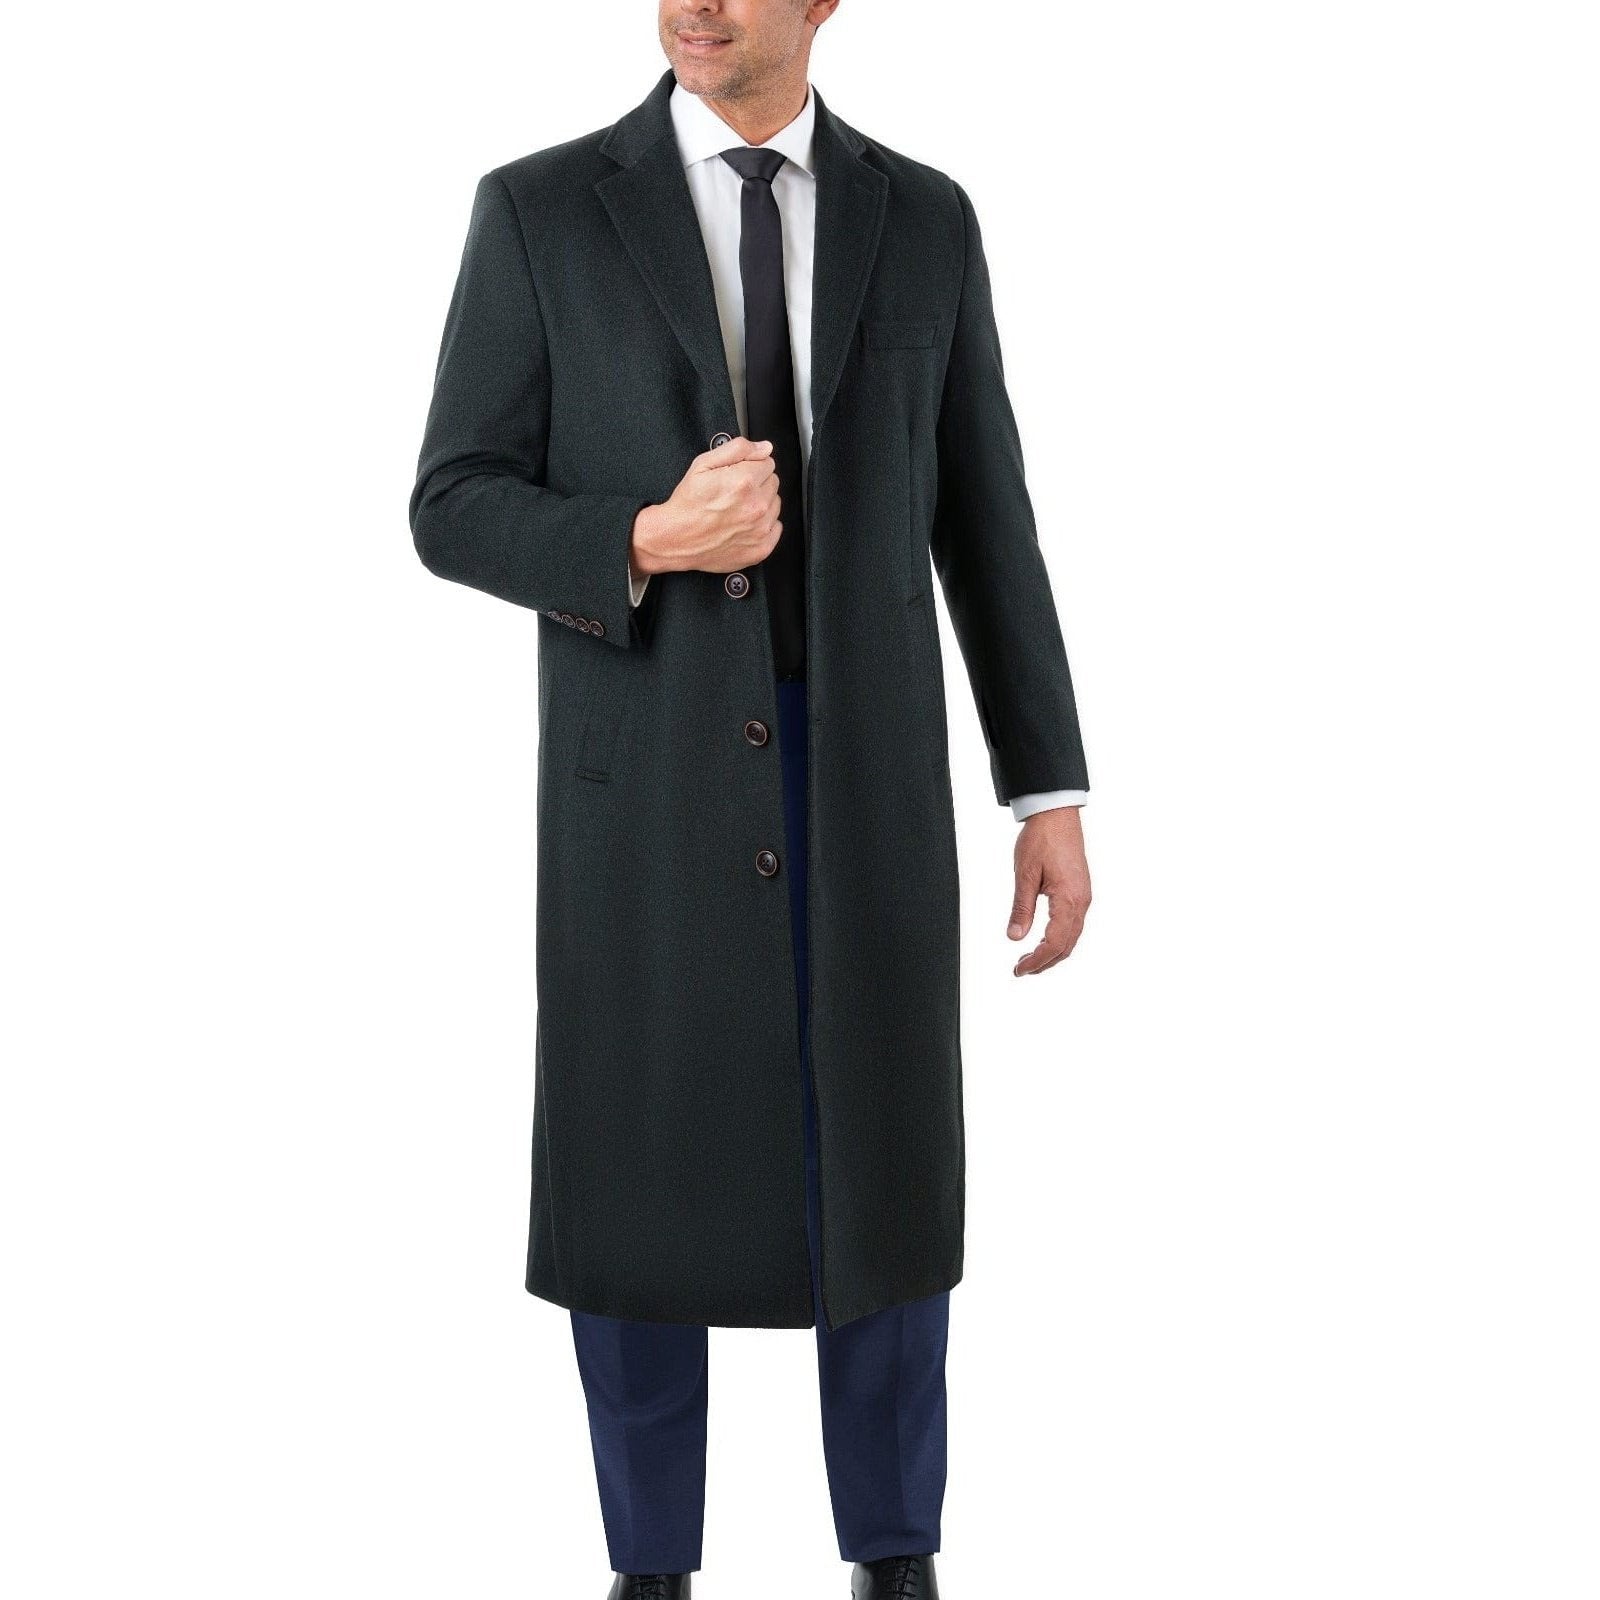 Men's Overcoats - Full Length Wool Coats | The Suit Depot